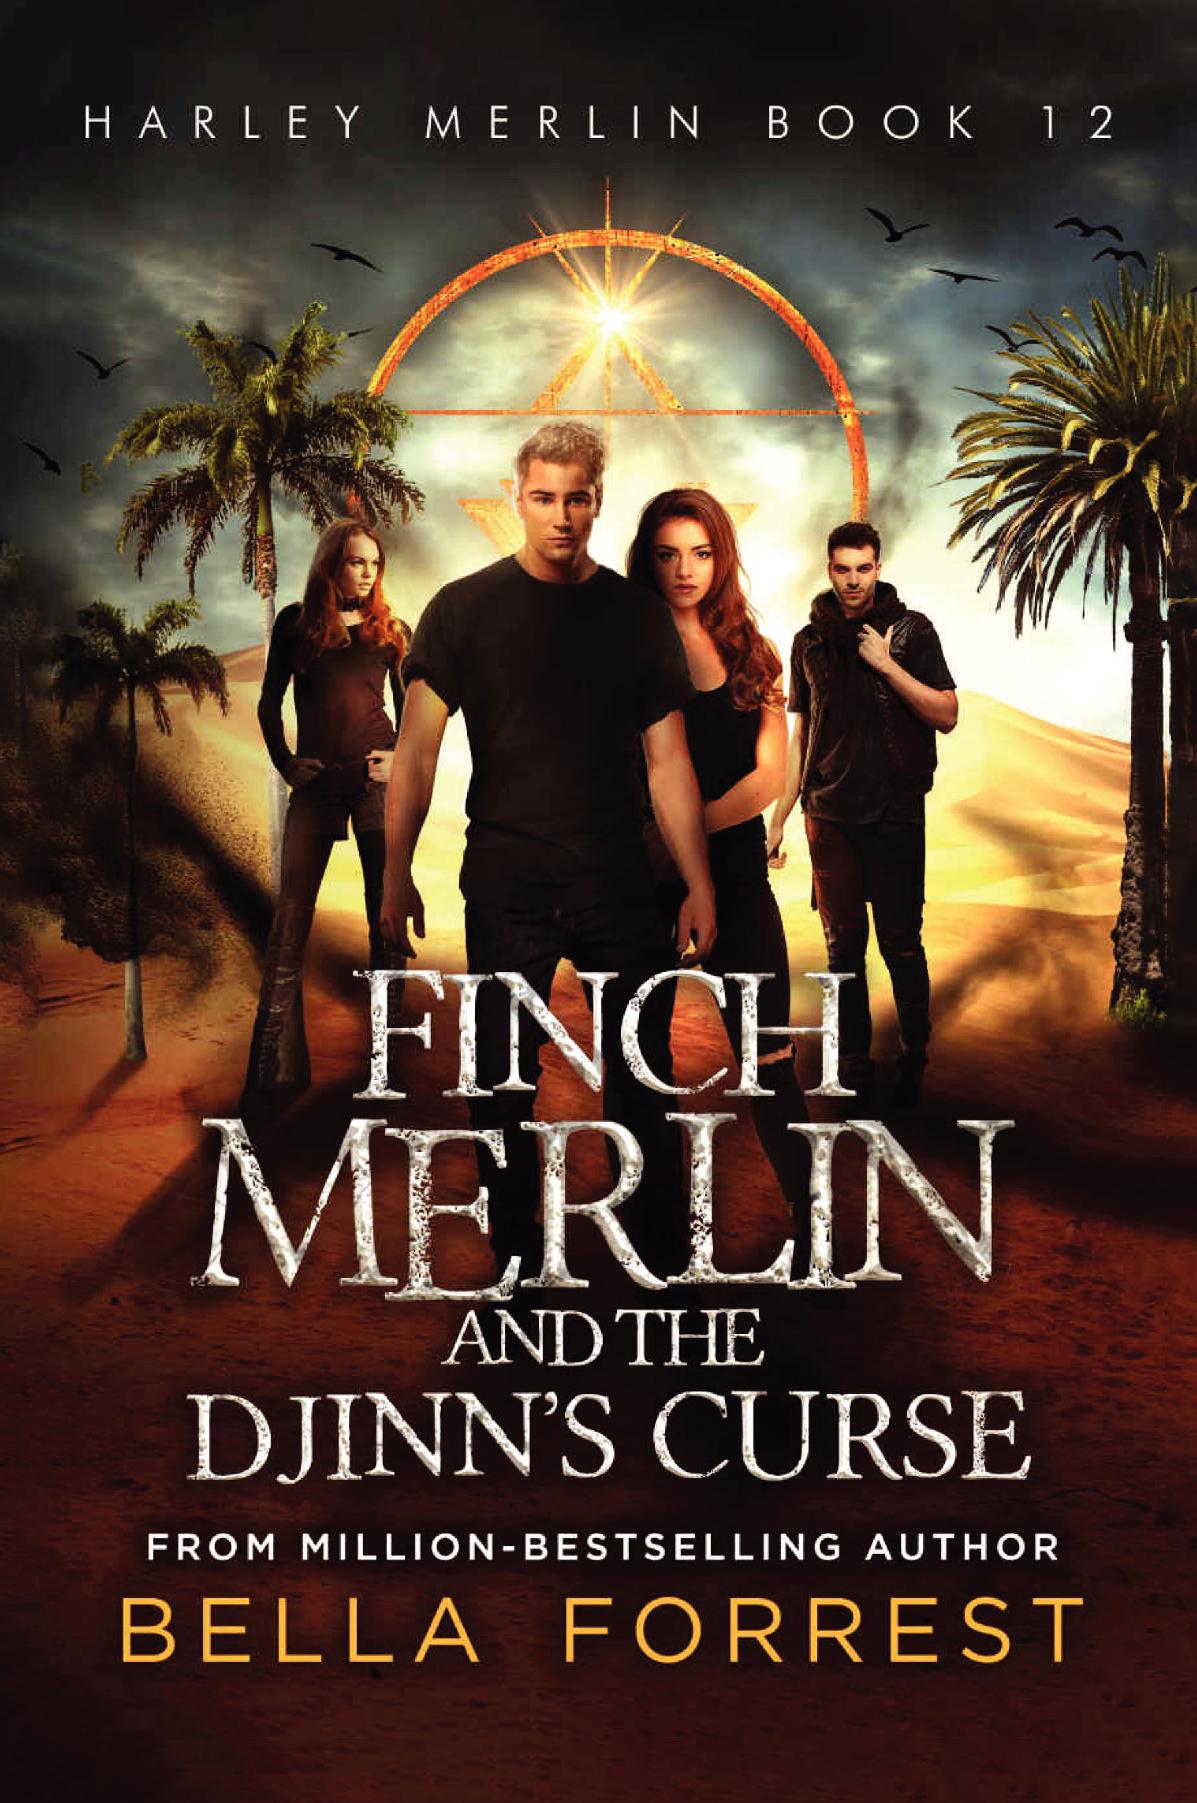 Harley Merlin 12: Finch Merlin and the Djinn’s Curse